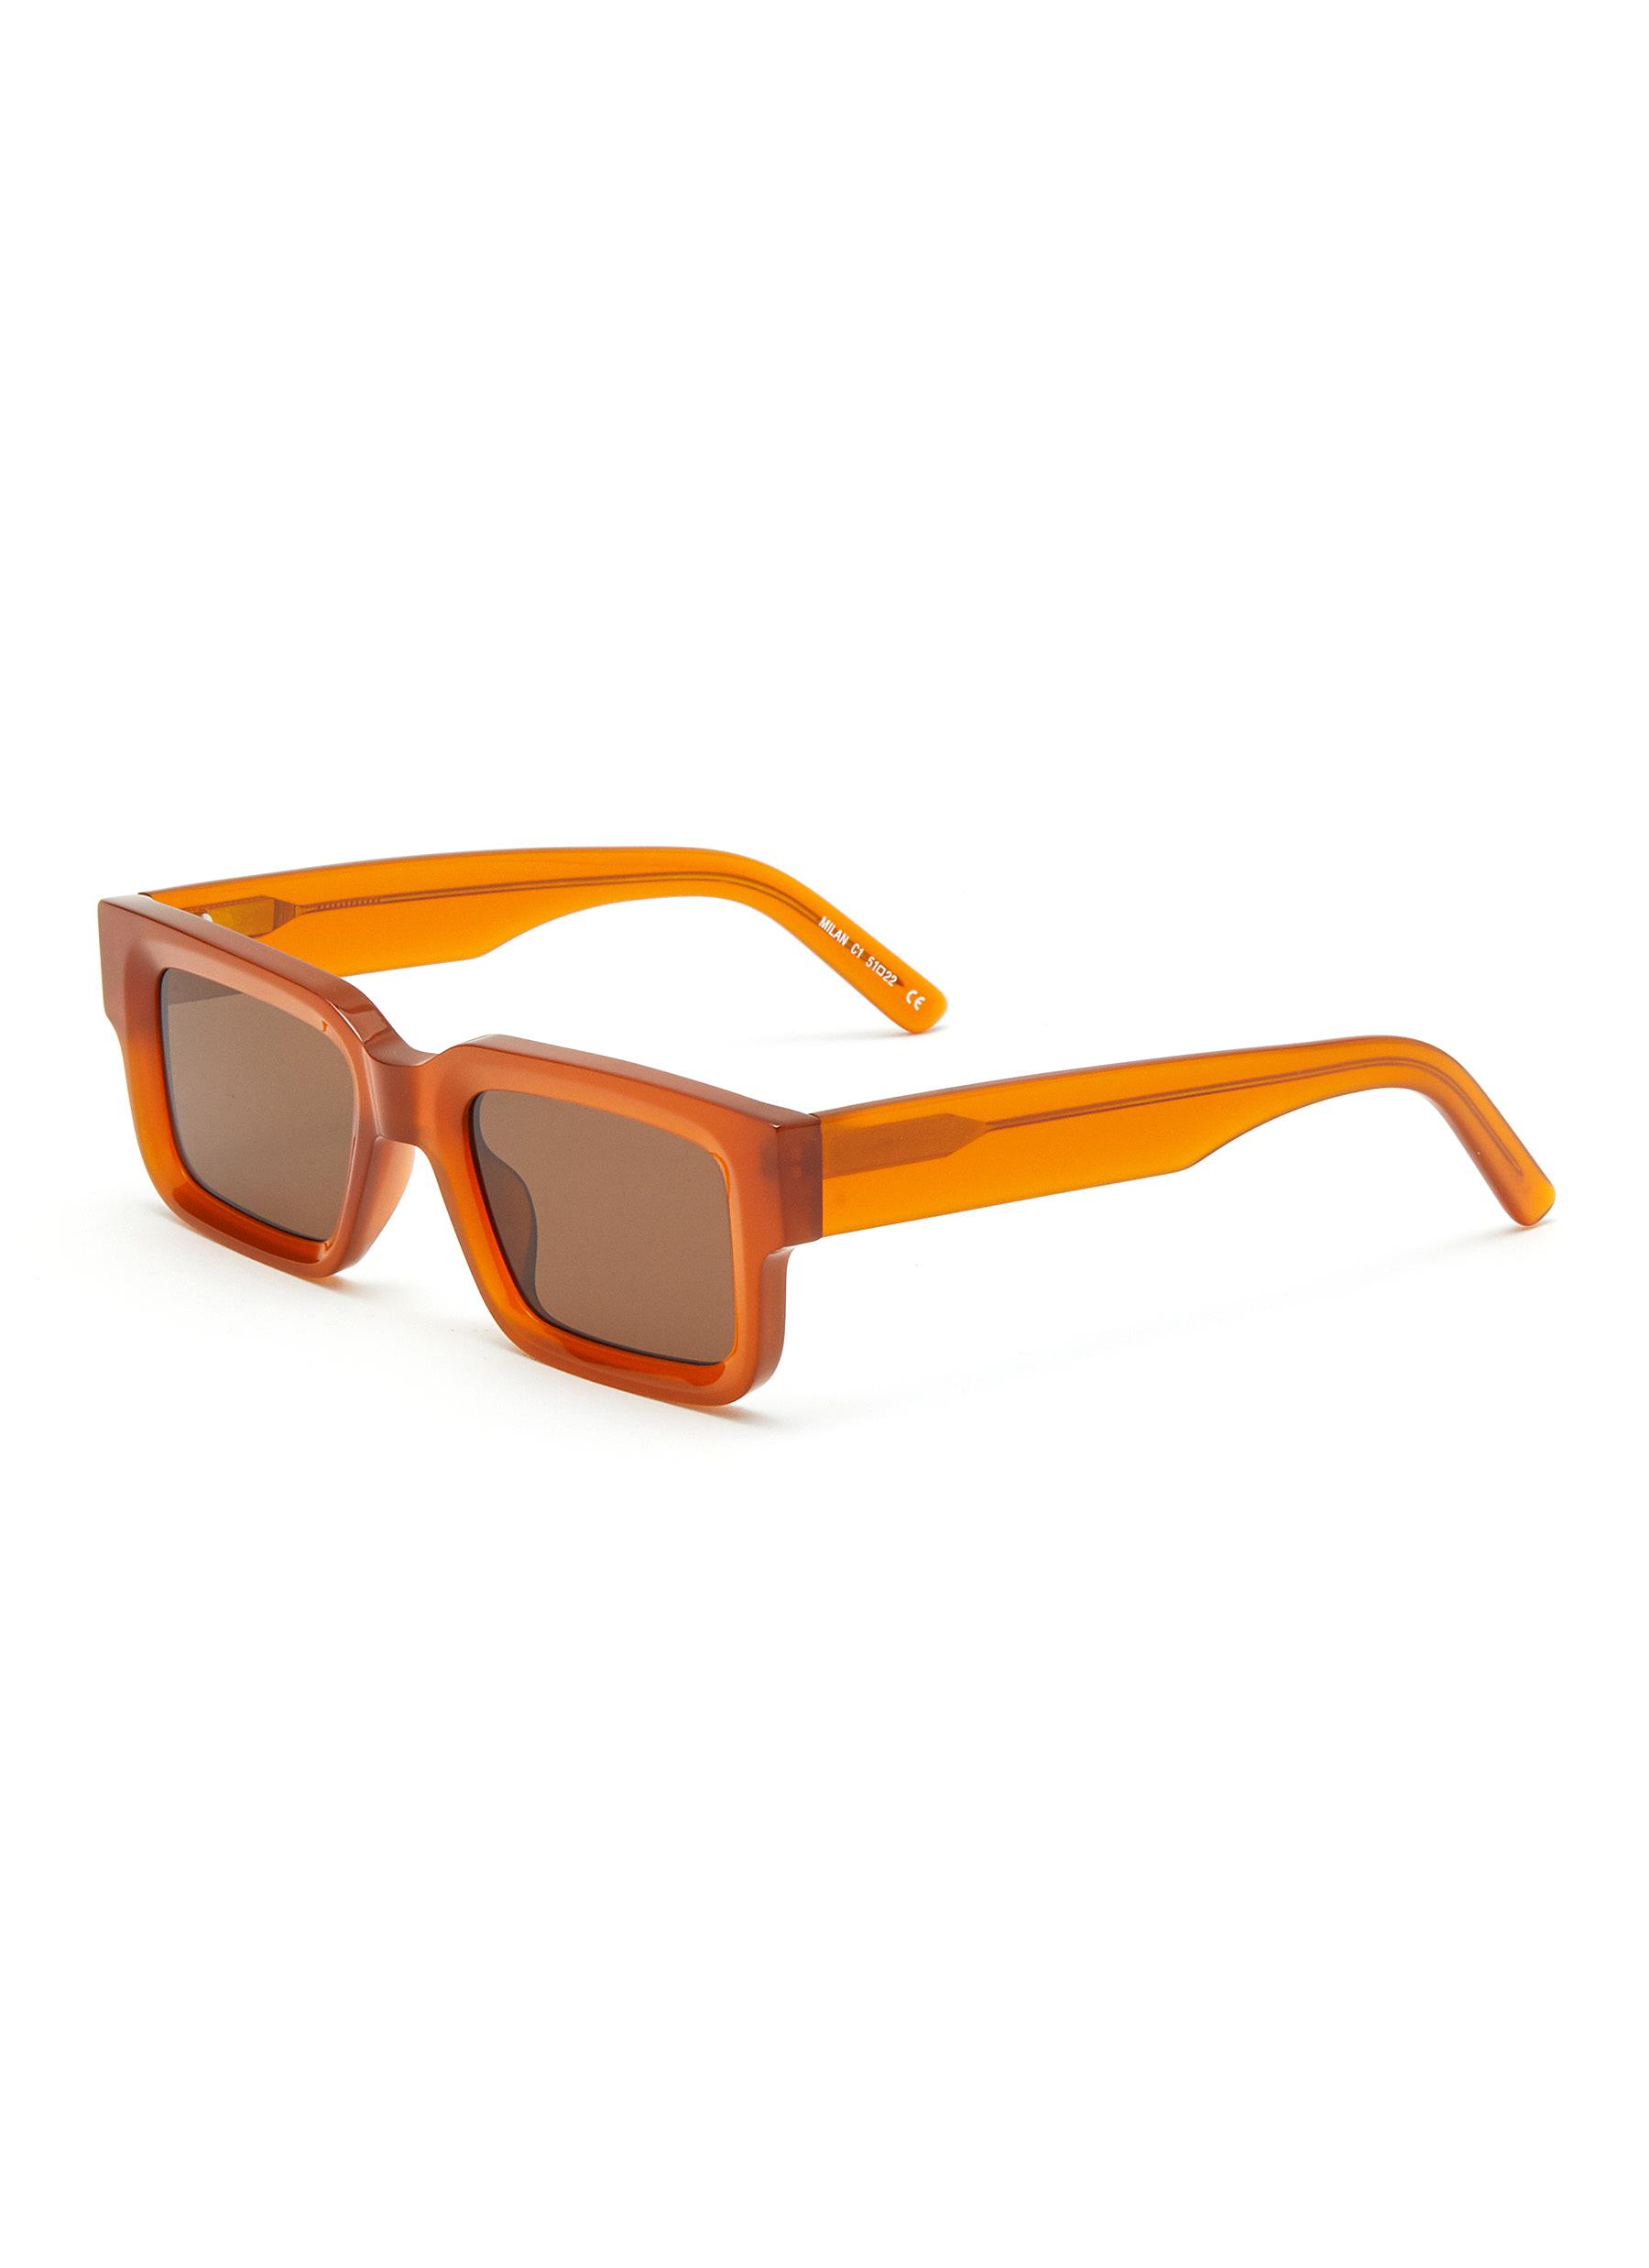 A. Society Milan' Thick Acetate Rectangular Sunglasses In Orange